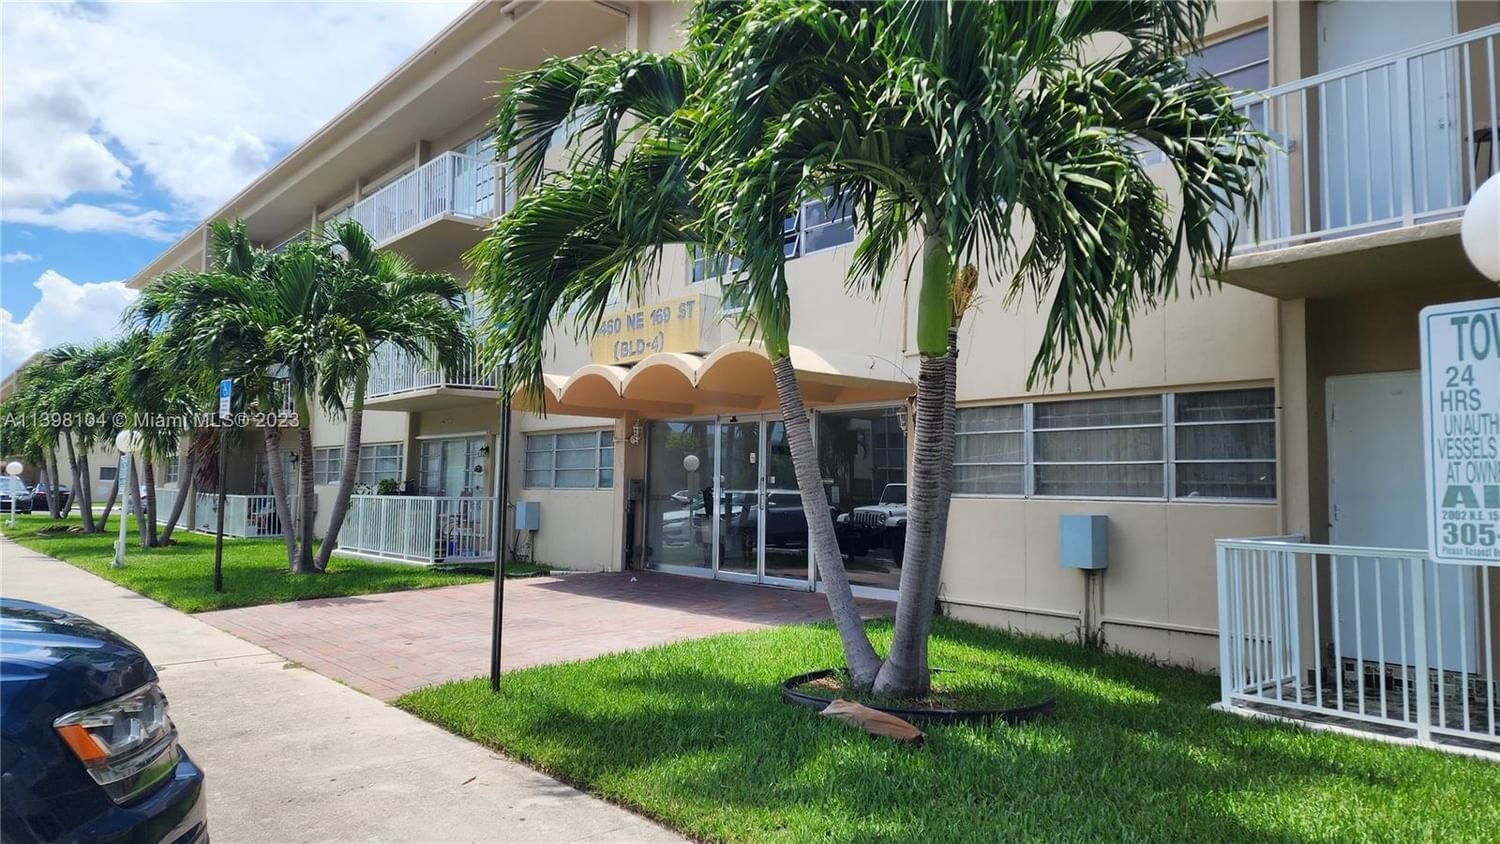 Real estate property located at 1460 169th St #107, Miami-Dade County, Miami, FL